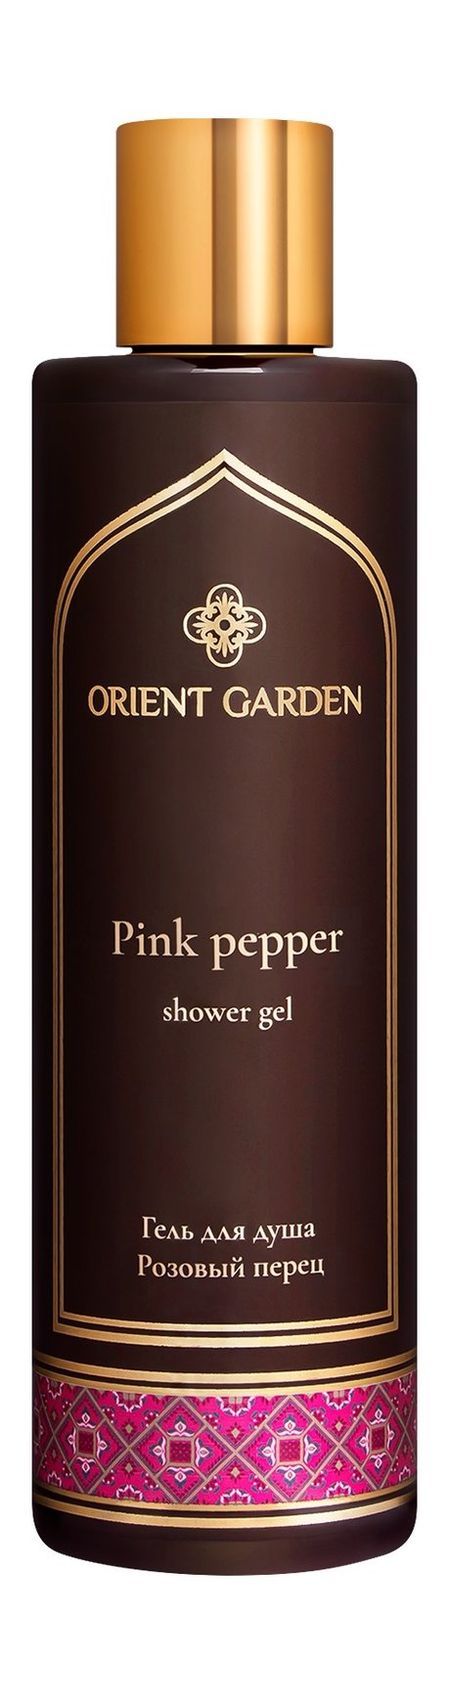 orient garden pink pepper shower gel